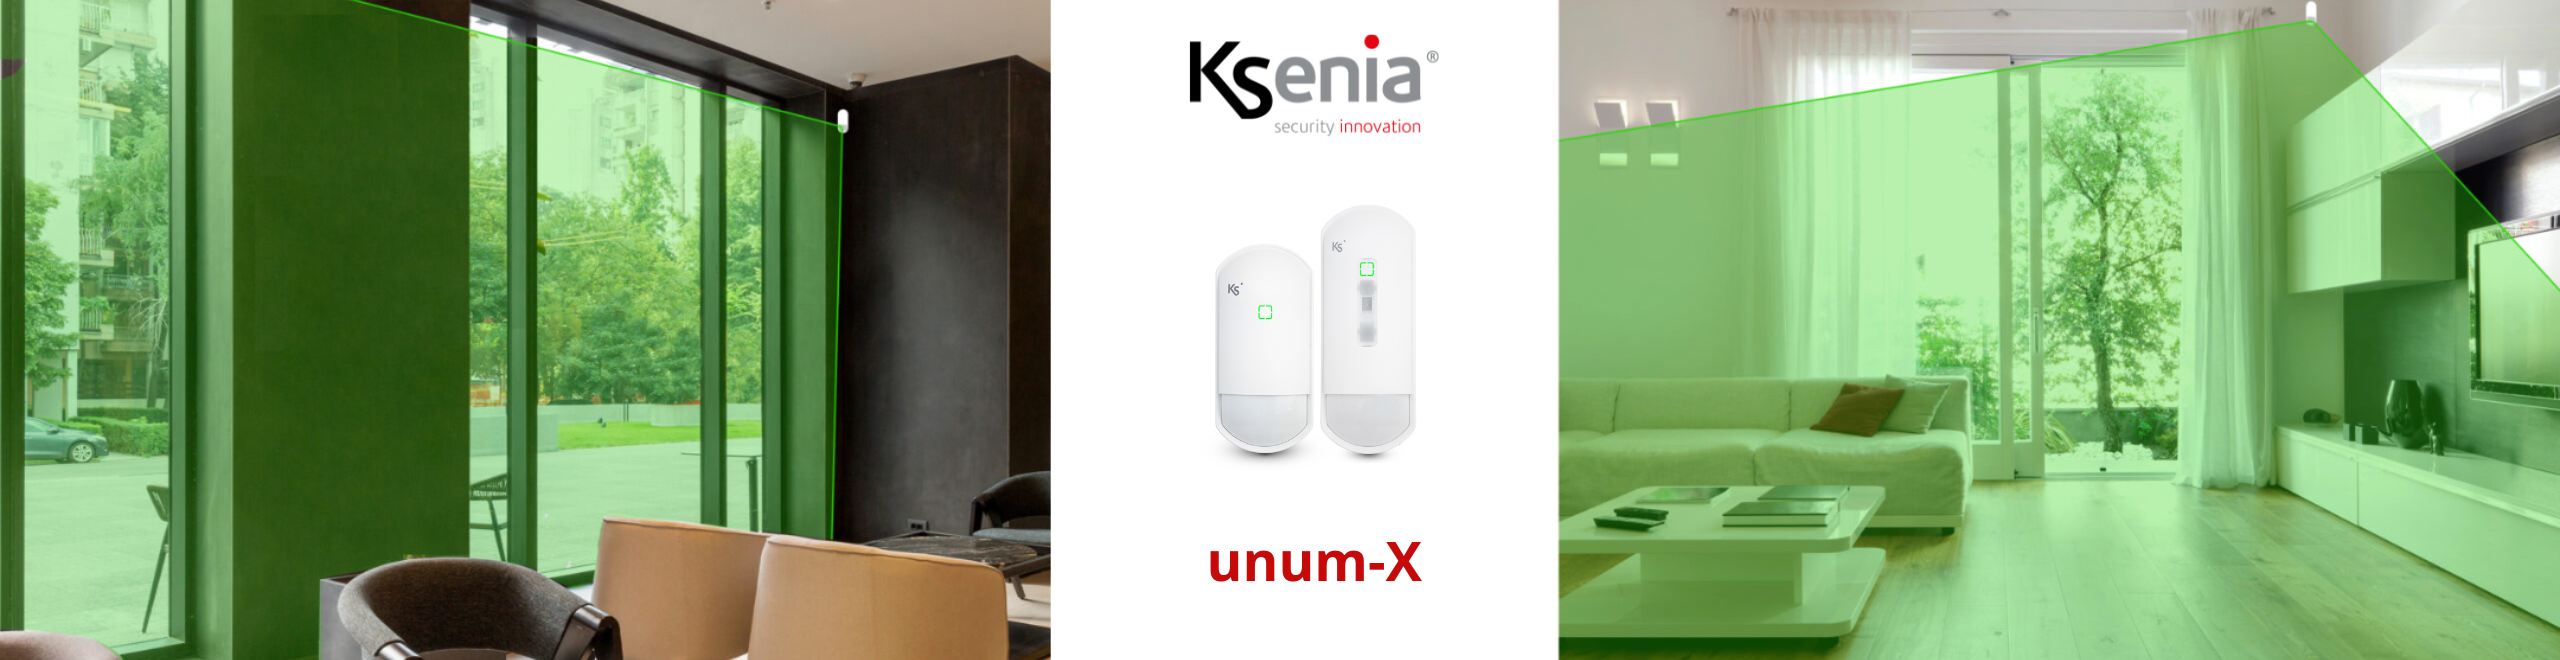 unum-X capteurs de Ksenia Security